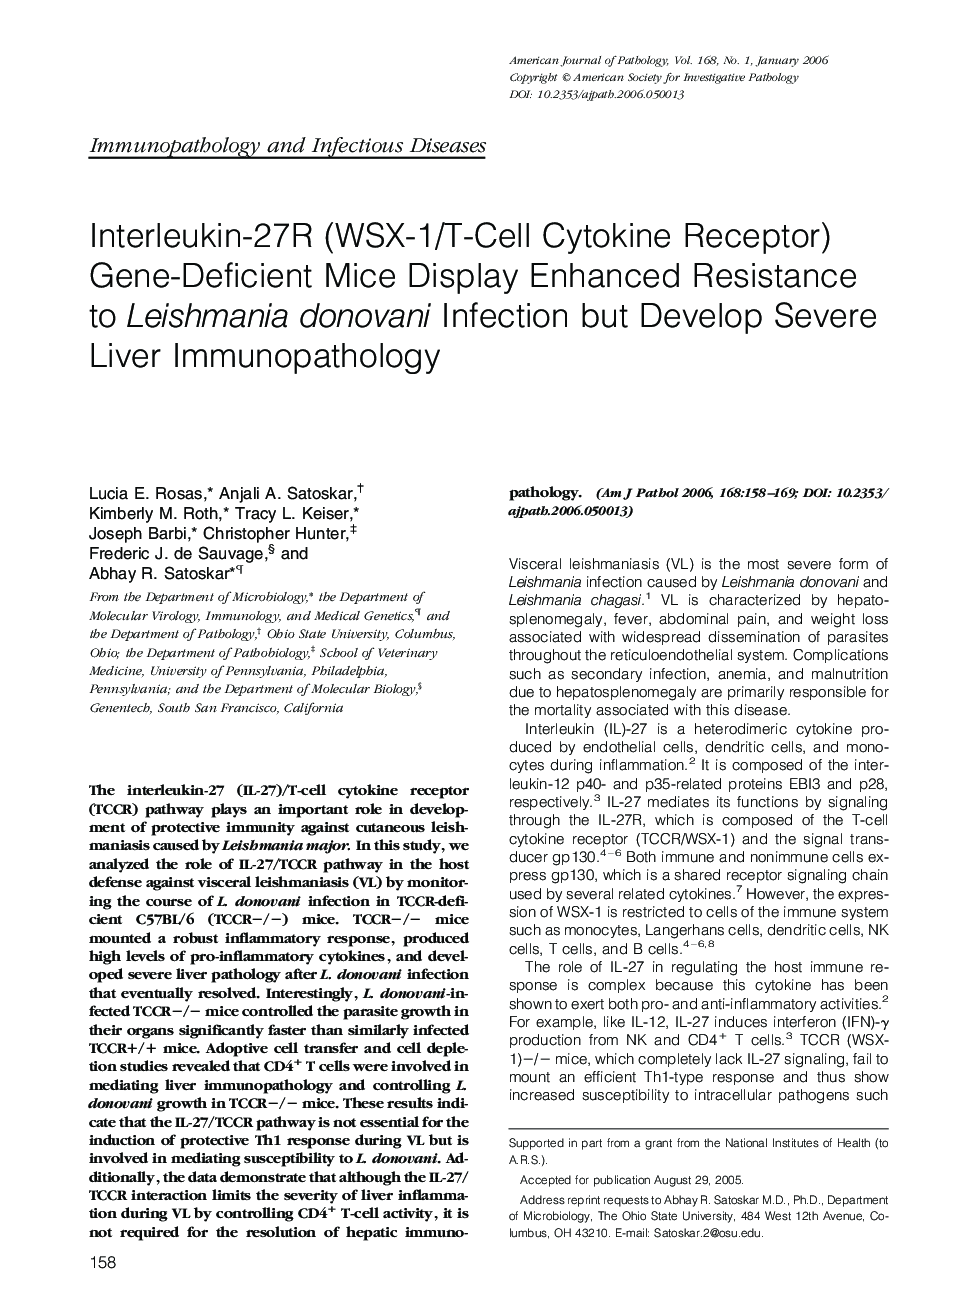 Regular ArticlesInterleukin-27R (WSX-1/T-Cell Cytokine Receptor) Gene-Deficient Mice Display Enhanced Resistance to Leishmania donovani Infection but Develop Severe Liver Immunopathology